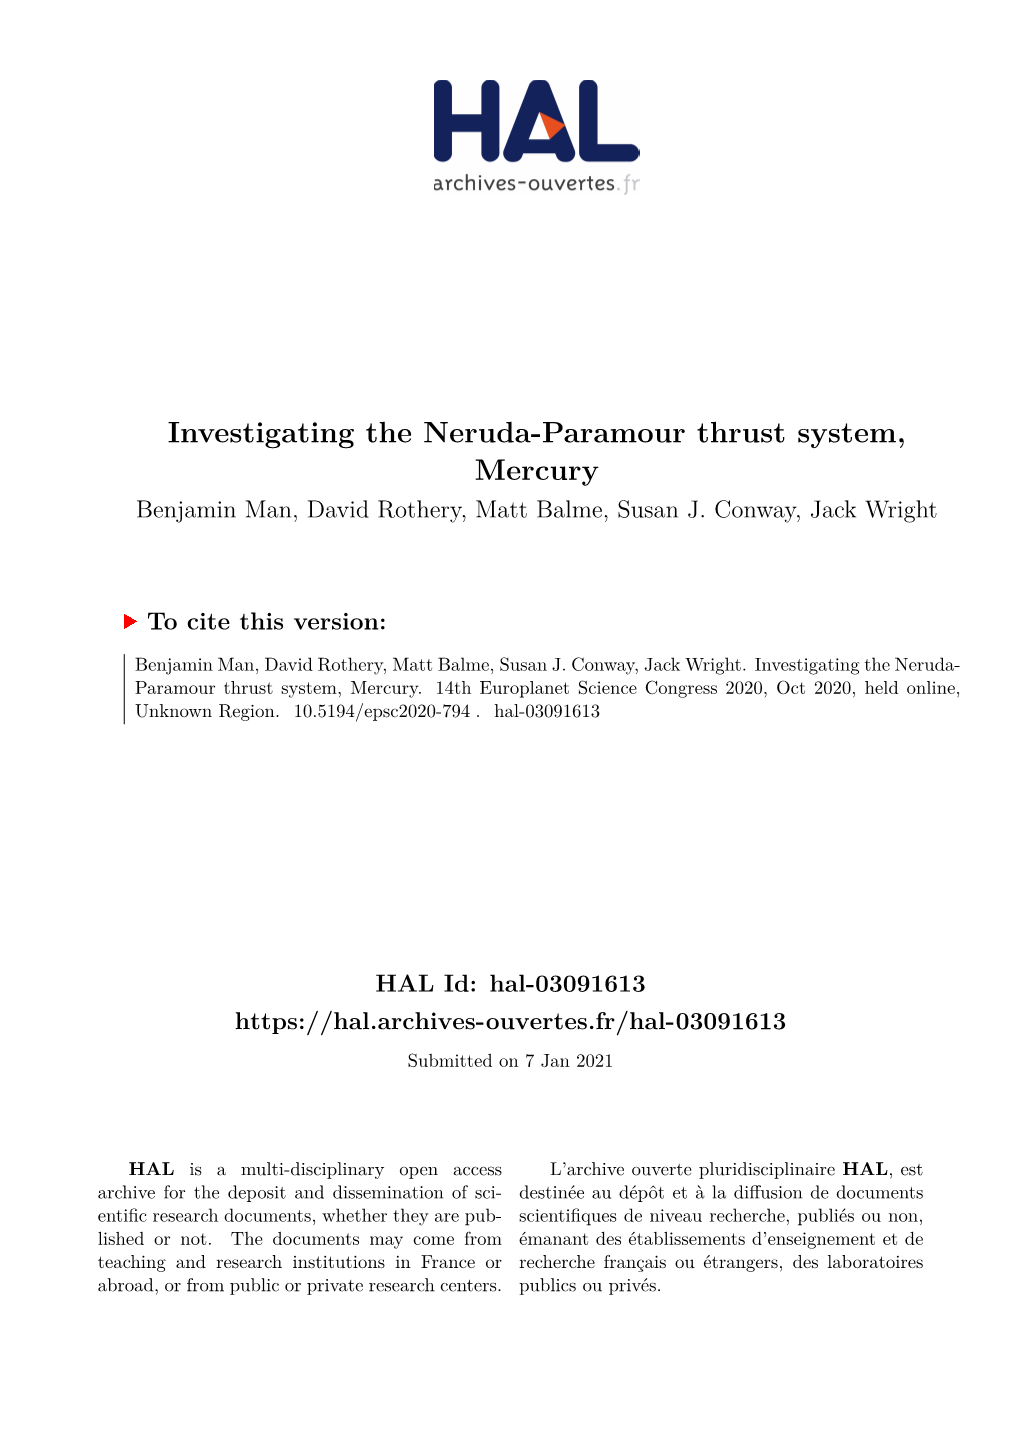 Investigating the Neruda-Paramour Thrust System, Mercury Benjamin Man, David Rothery, Matt Balme, Susan J